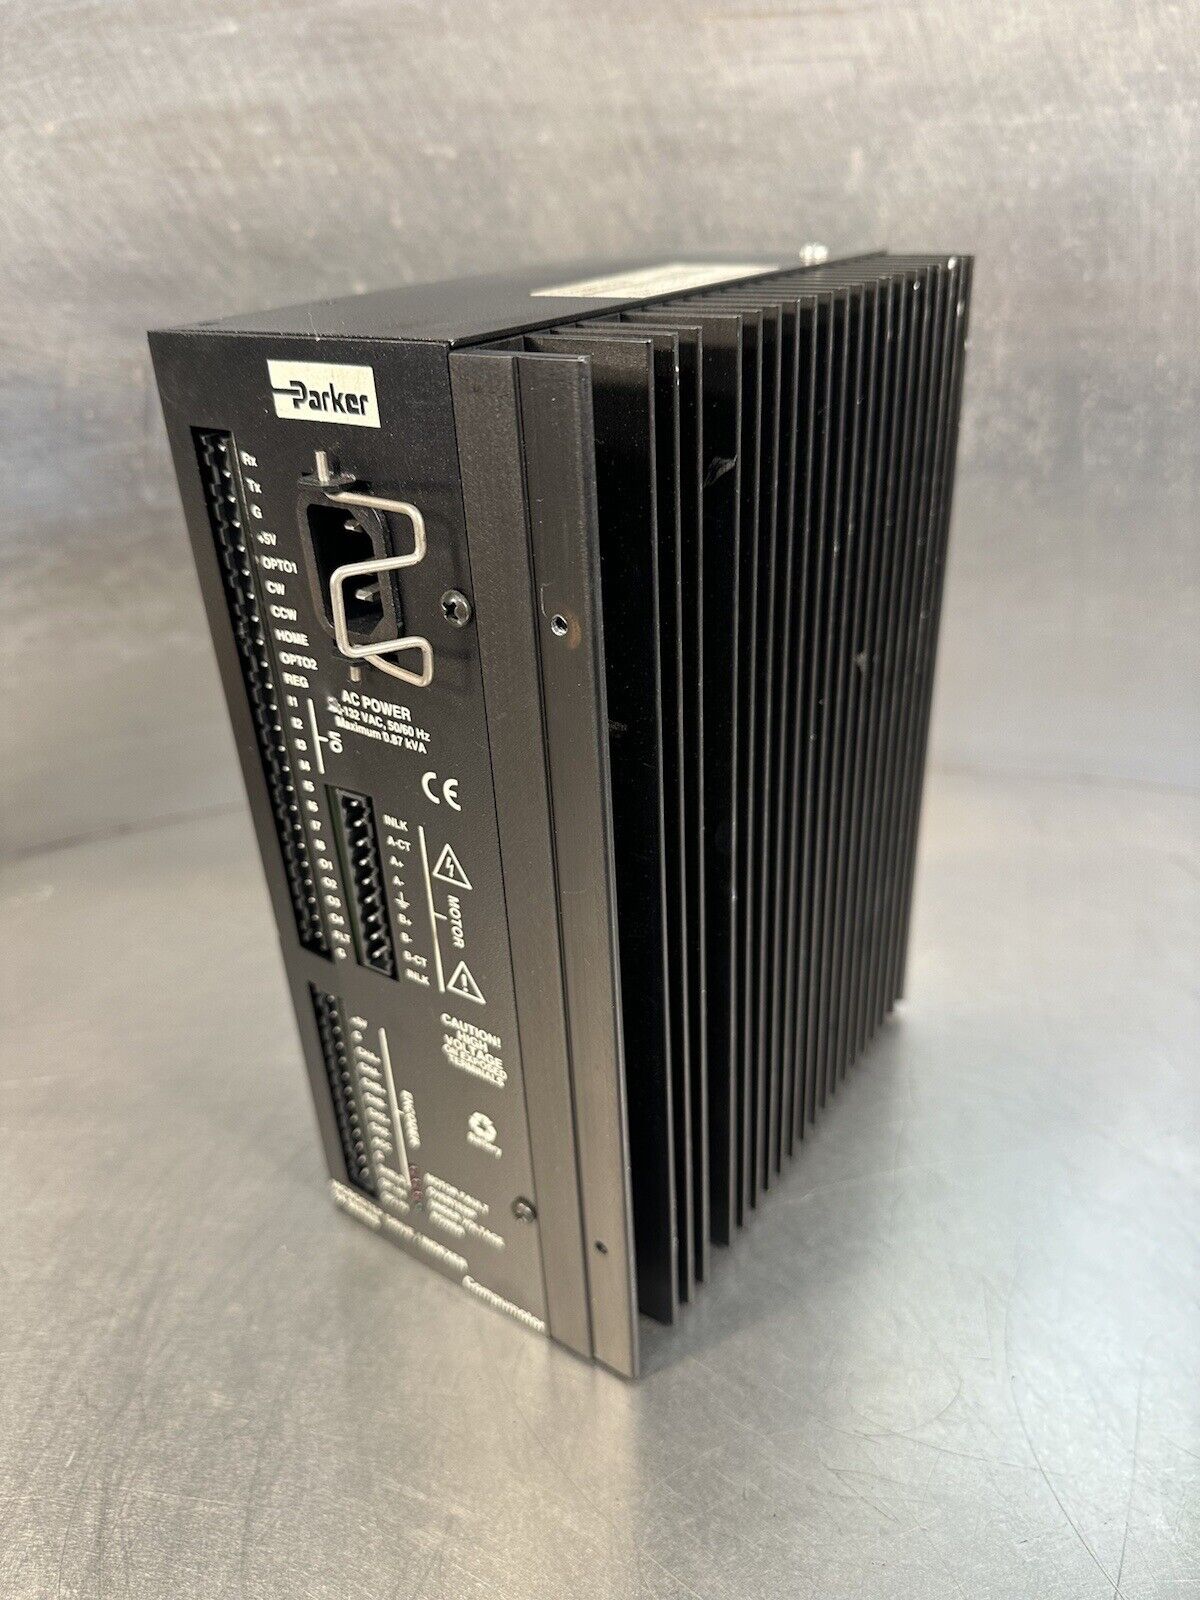 Parker Compumotor SX6-DRIVE Microstepping Drive / Controller - Each (BIN-1.4.2)